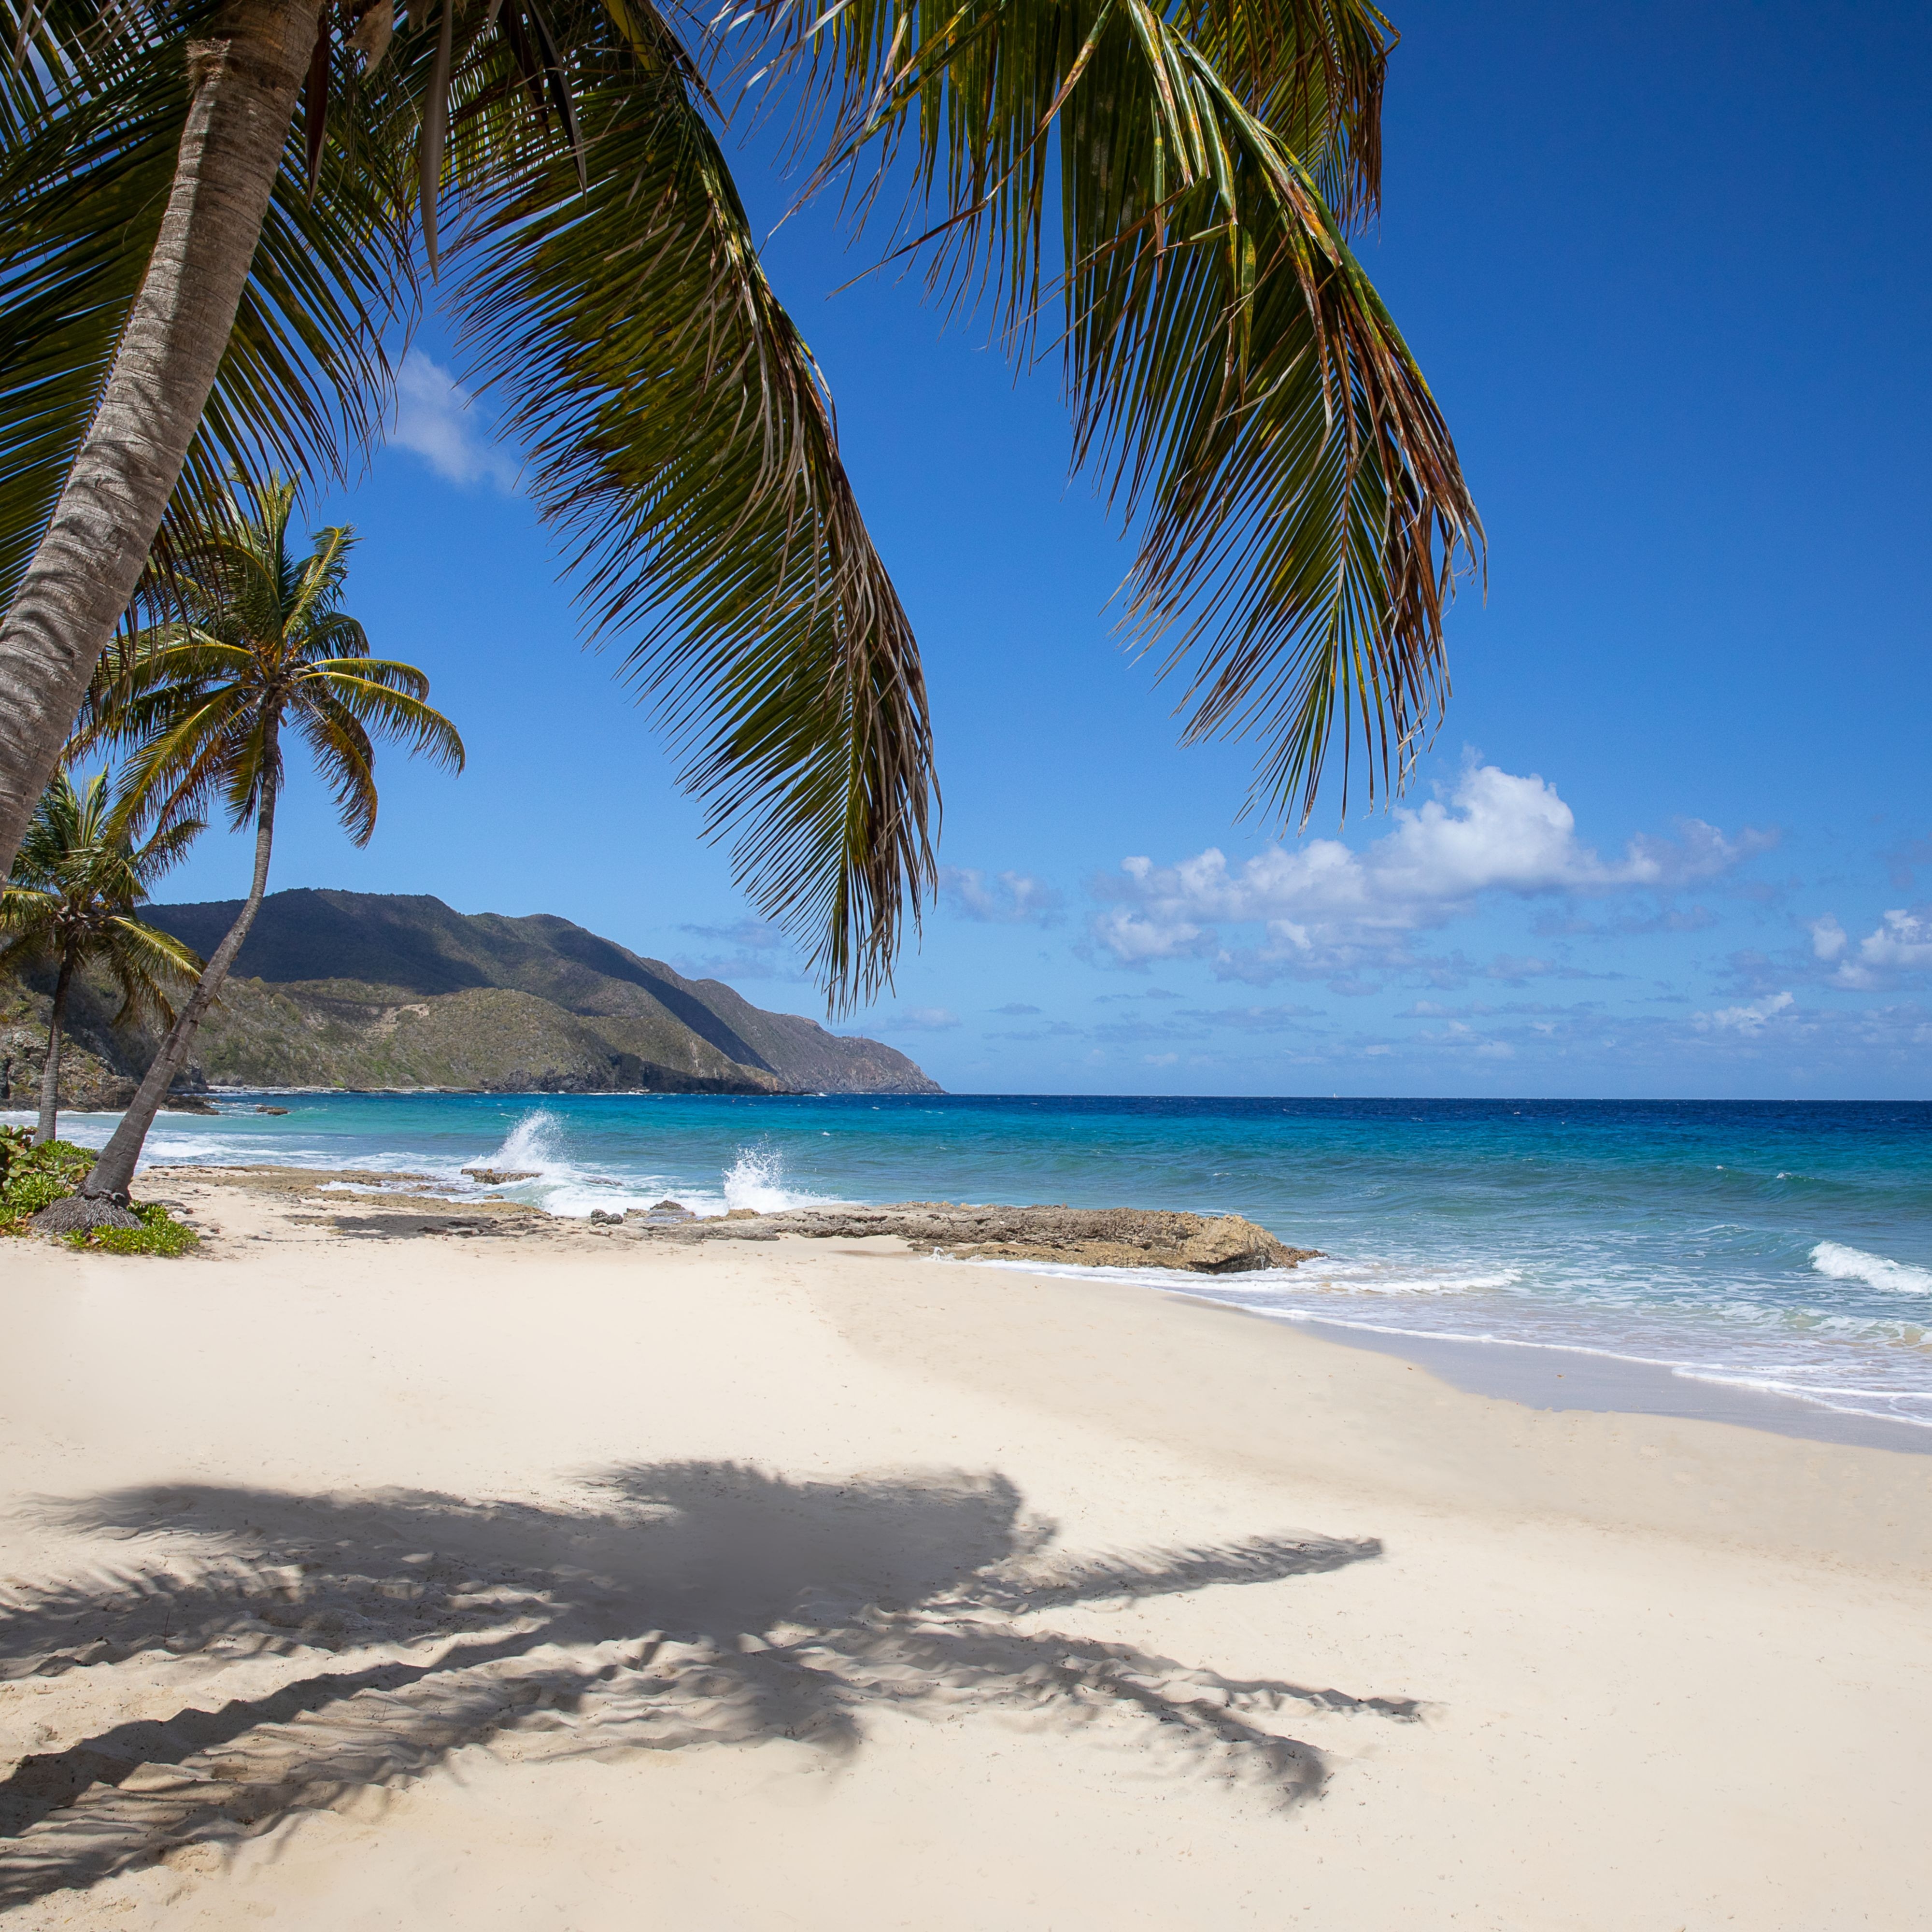 Palm trees on beach leaning toward sea